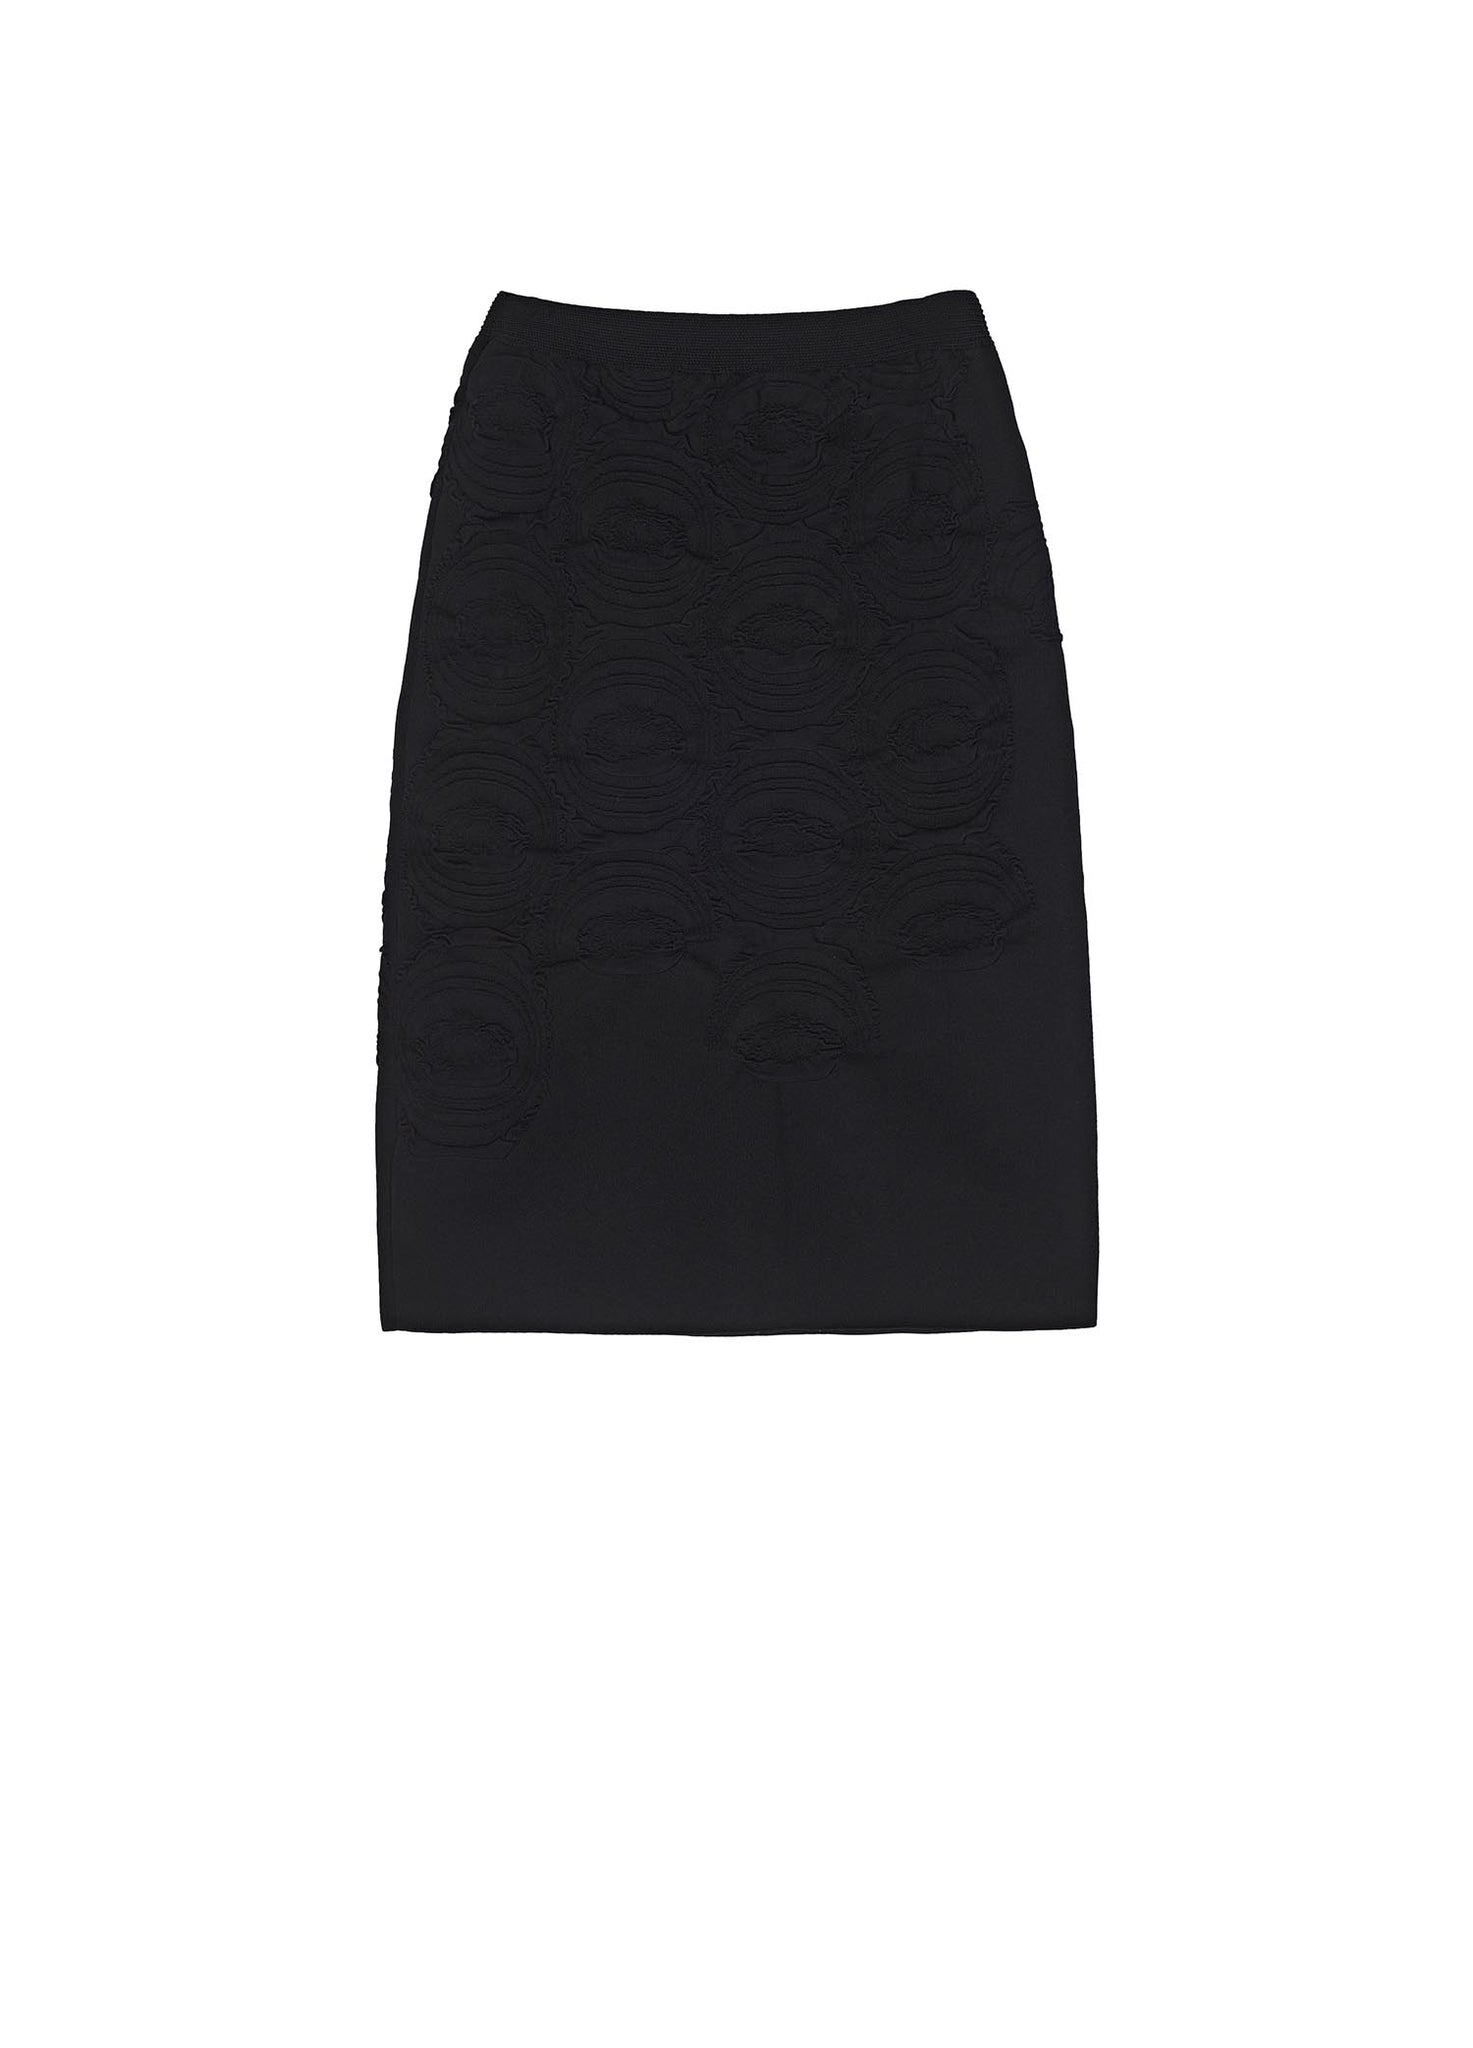 Skirts / JNBY Three-Dimensional Knitting Jacquard Skirt (100% Cotton)